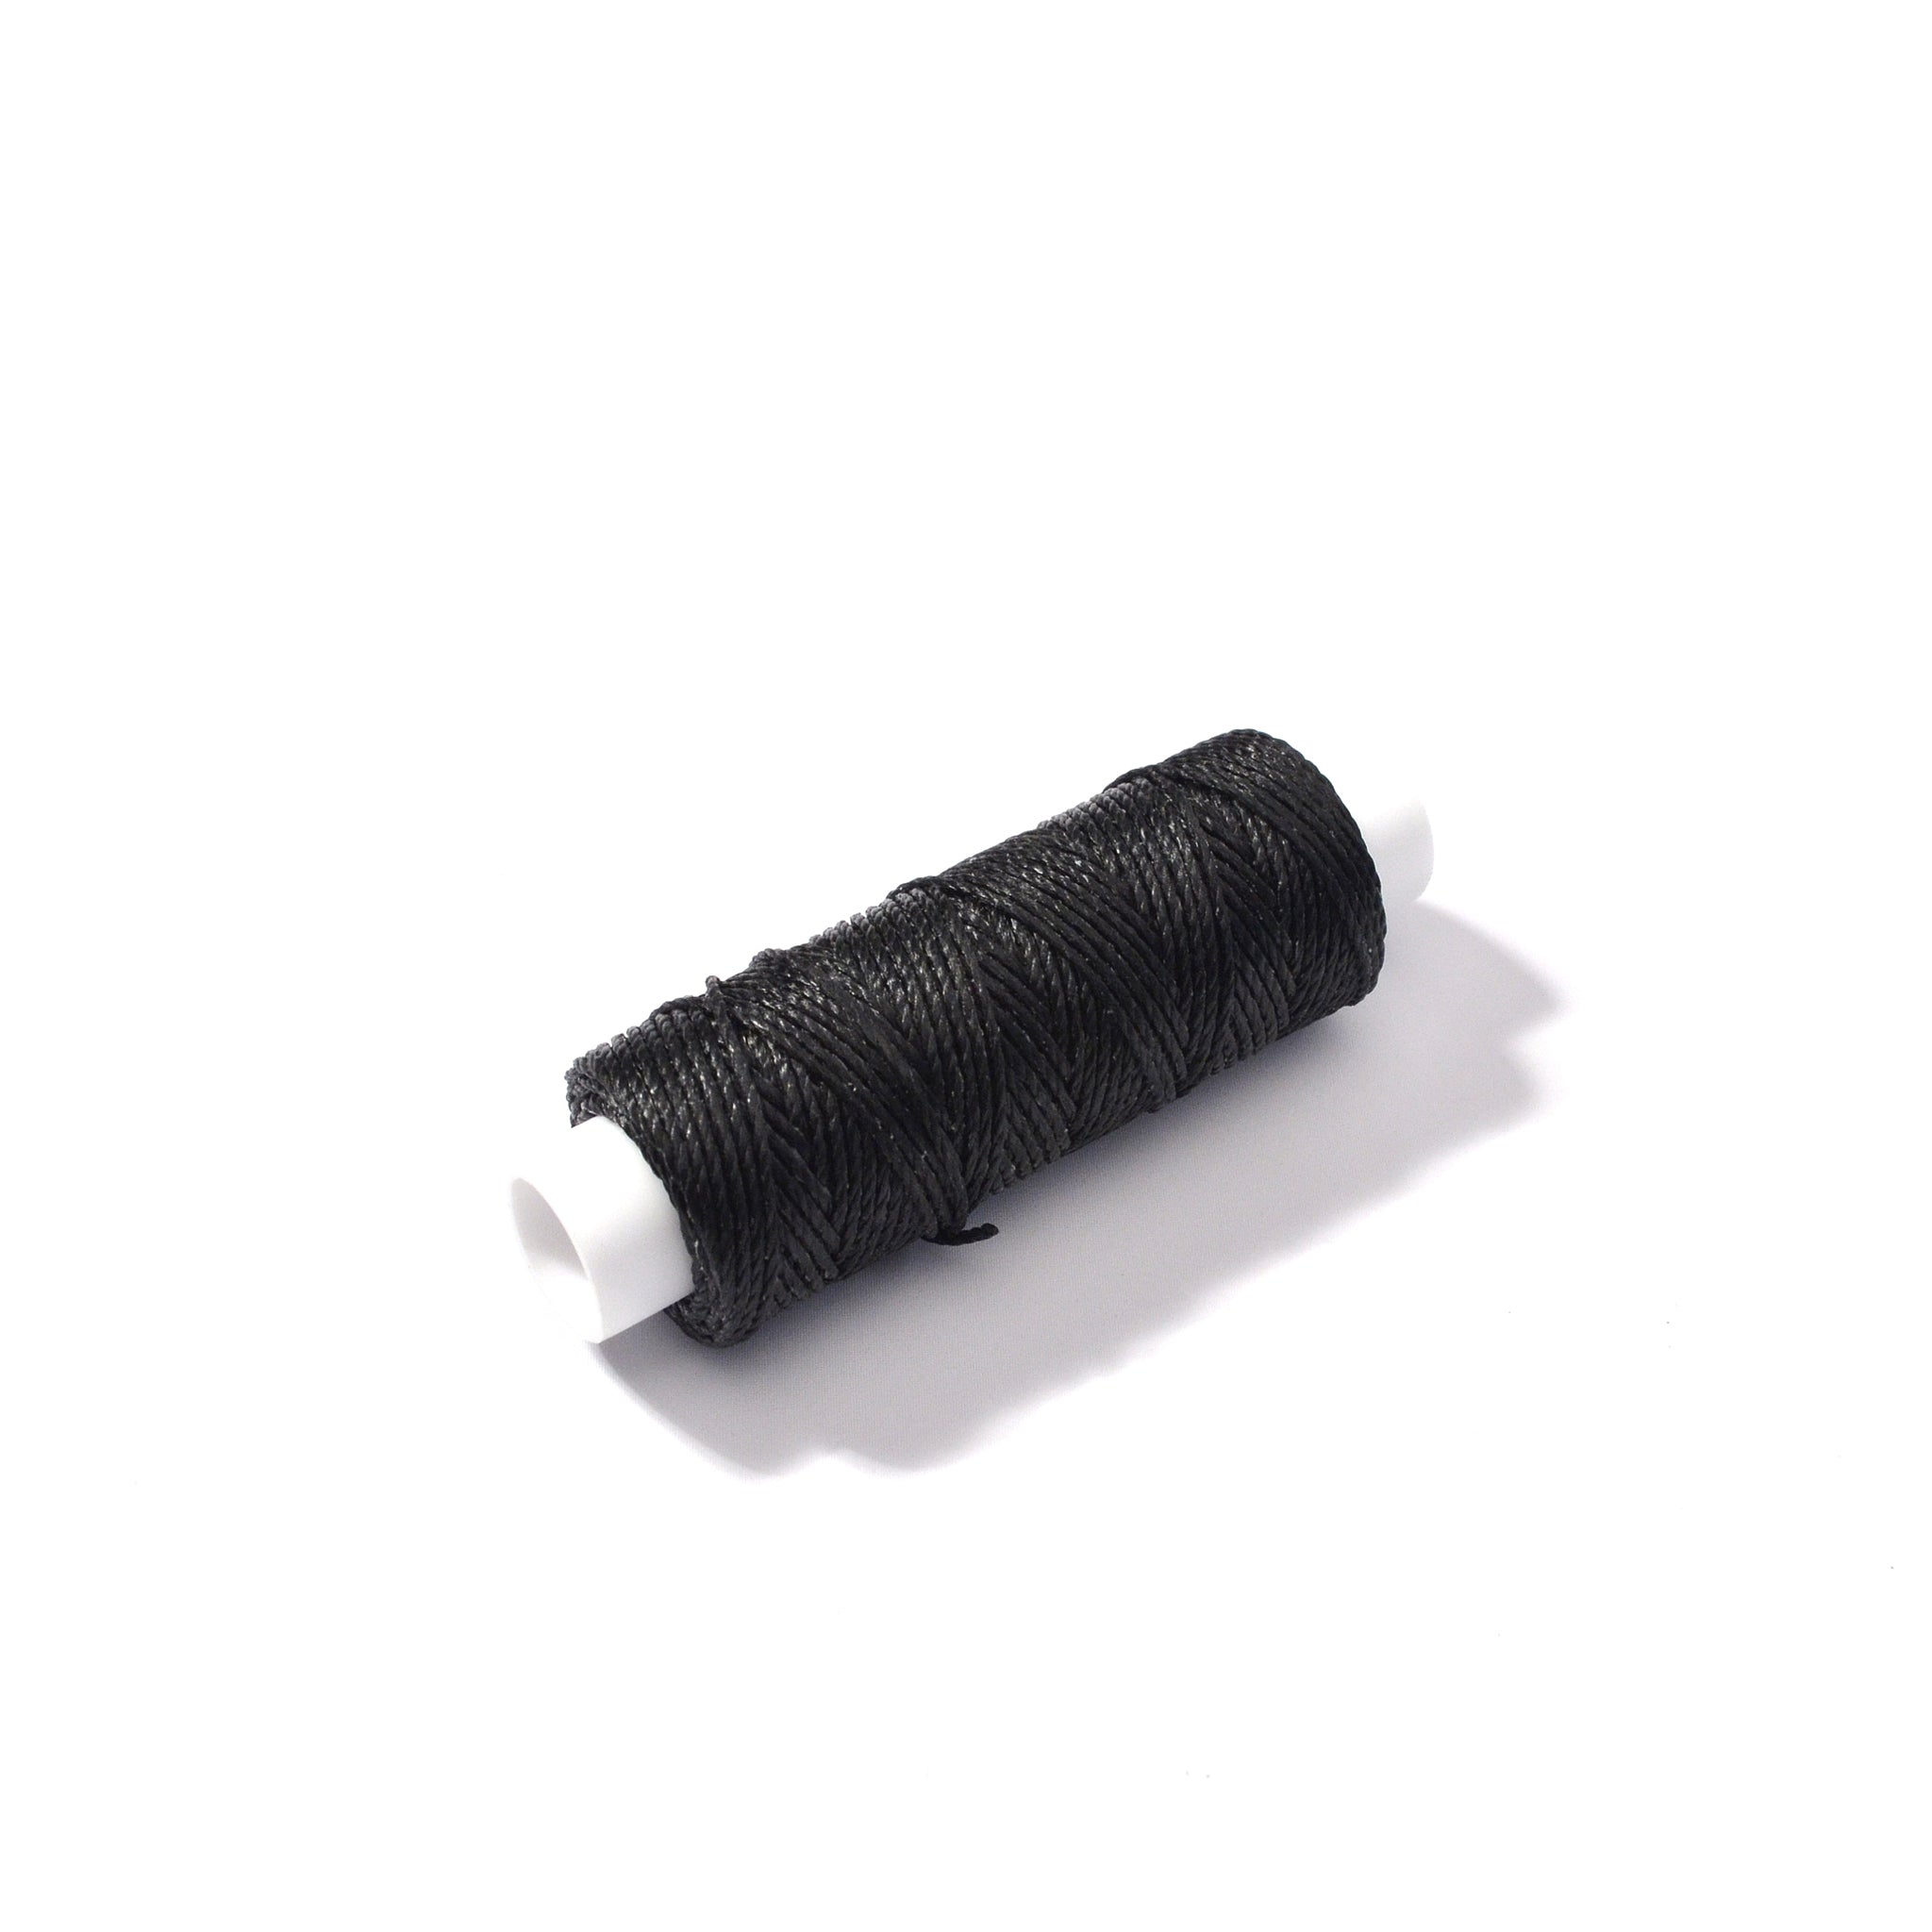 Black Waxed Nylon Thread from Identity Leathercraft